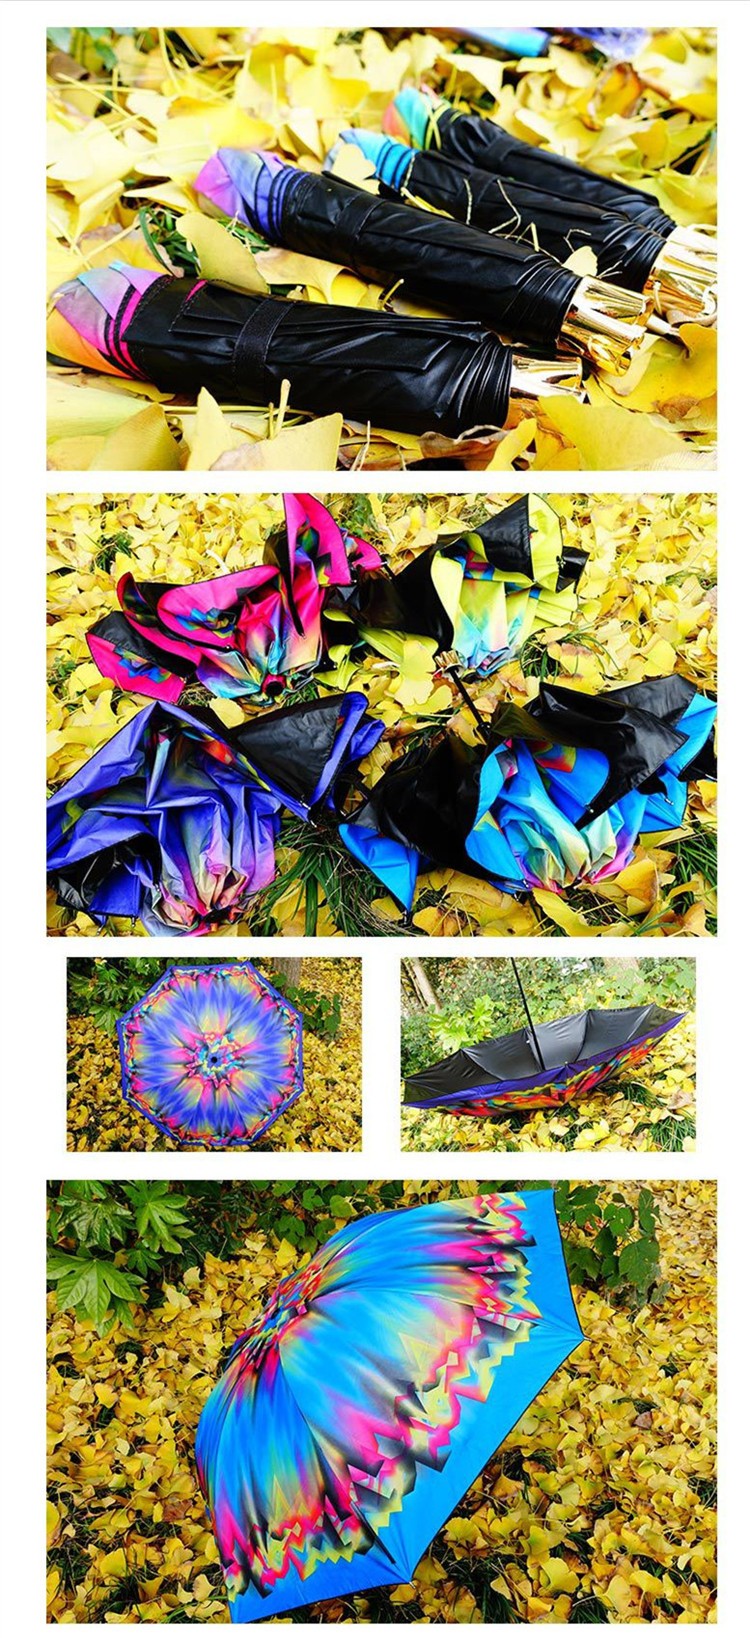 The new creative Women parasol colorful Umbrella black glue UV sunshade umbrella Colorful Female Sunny And Rainy Umbrella HI14 (4)